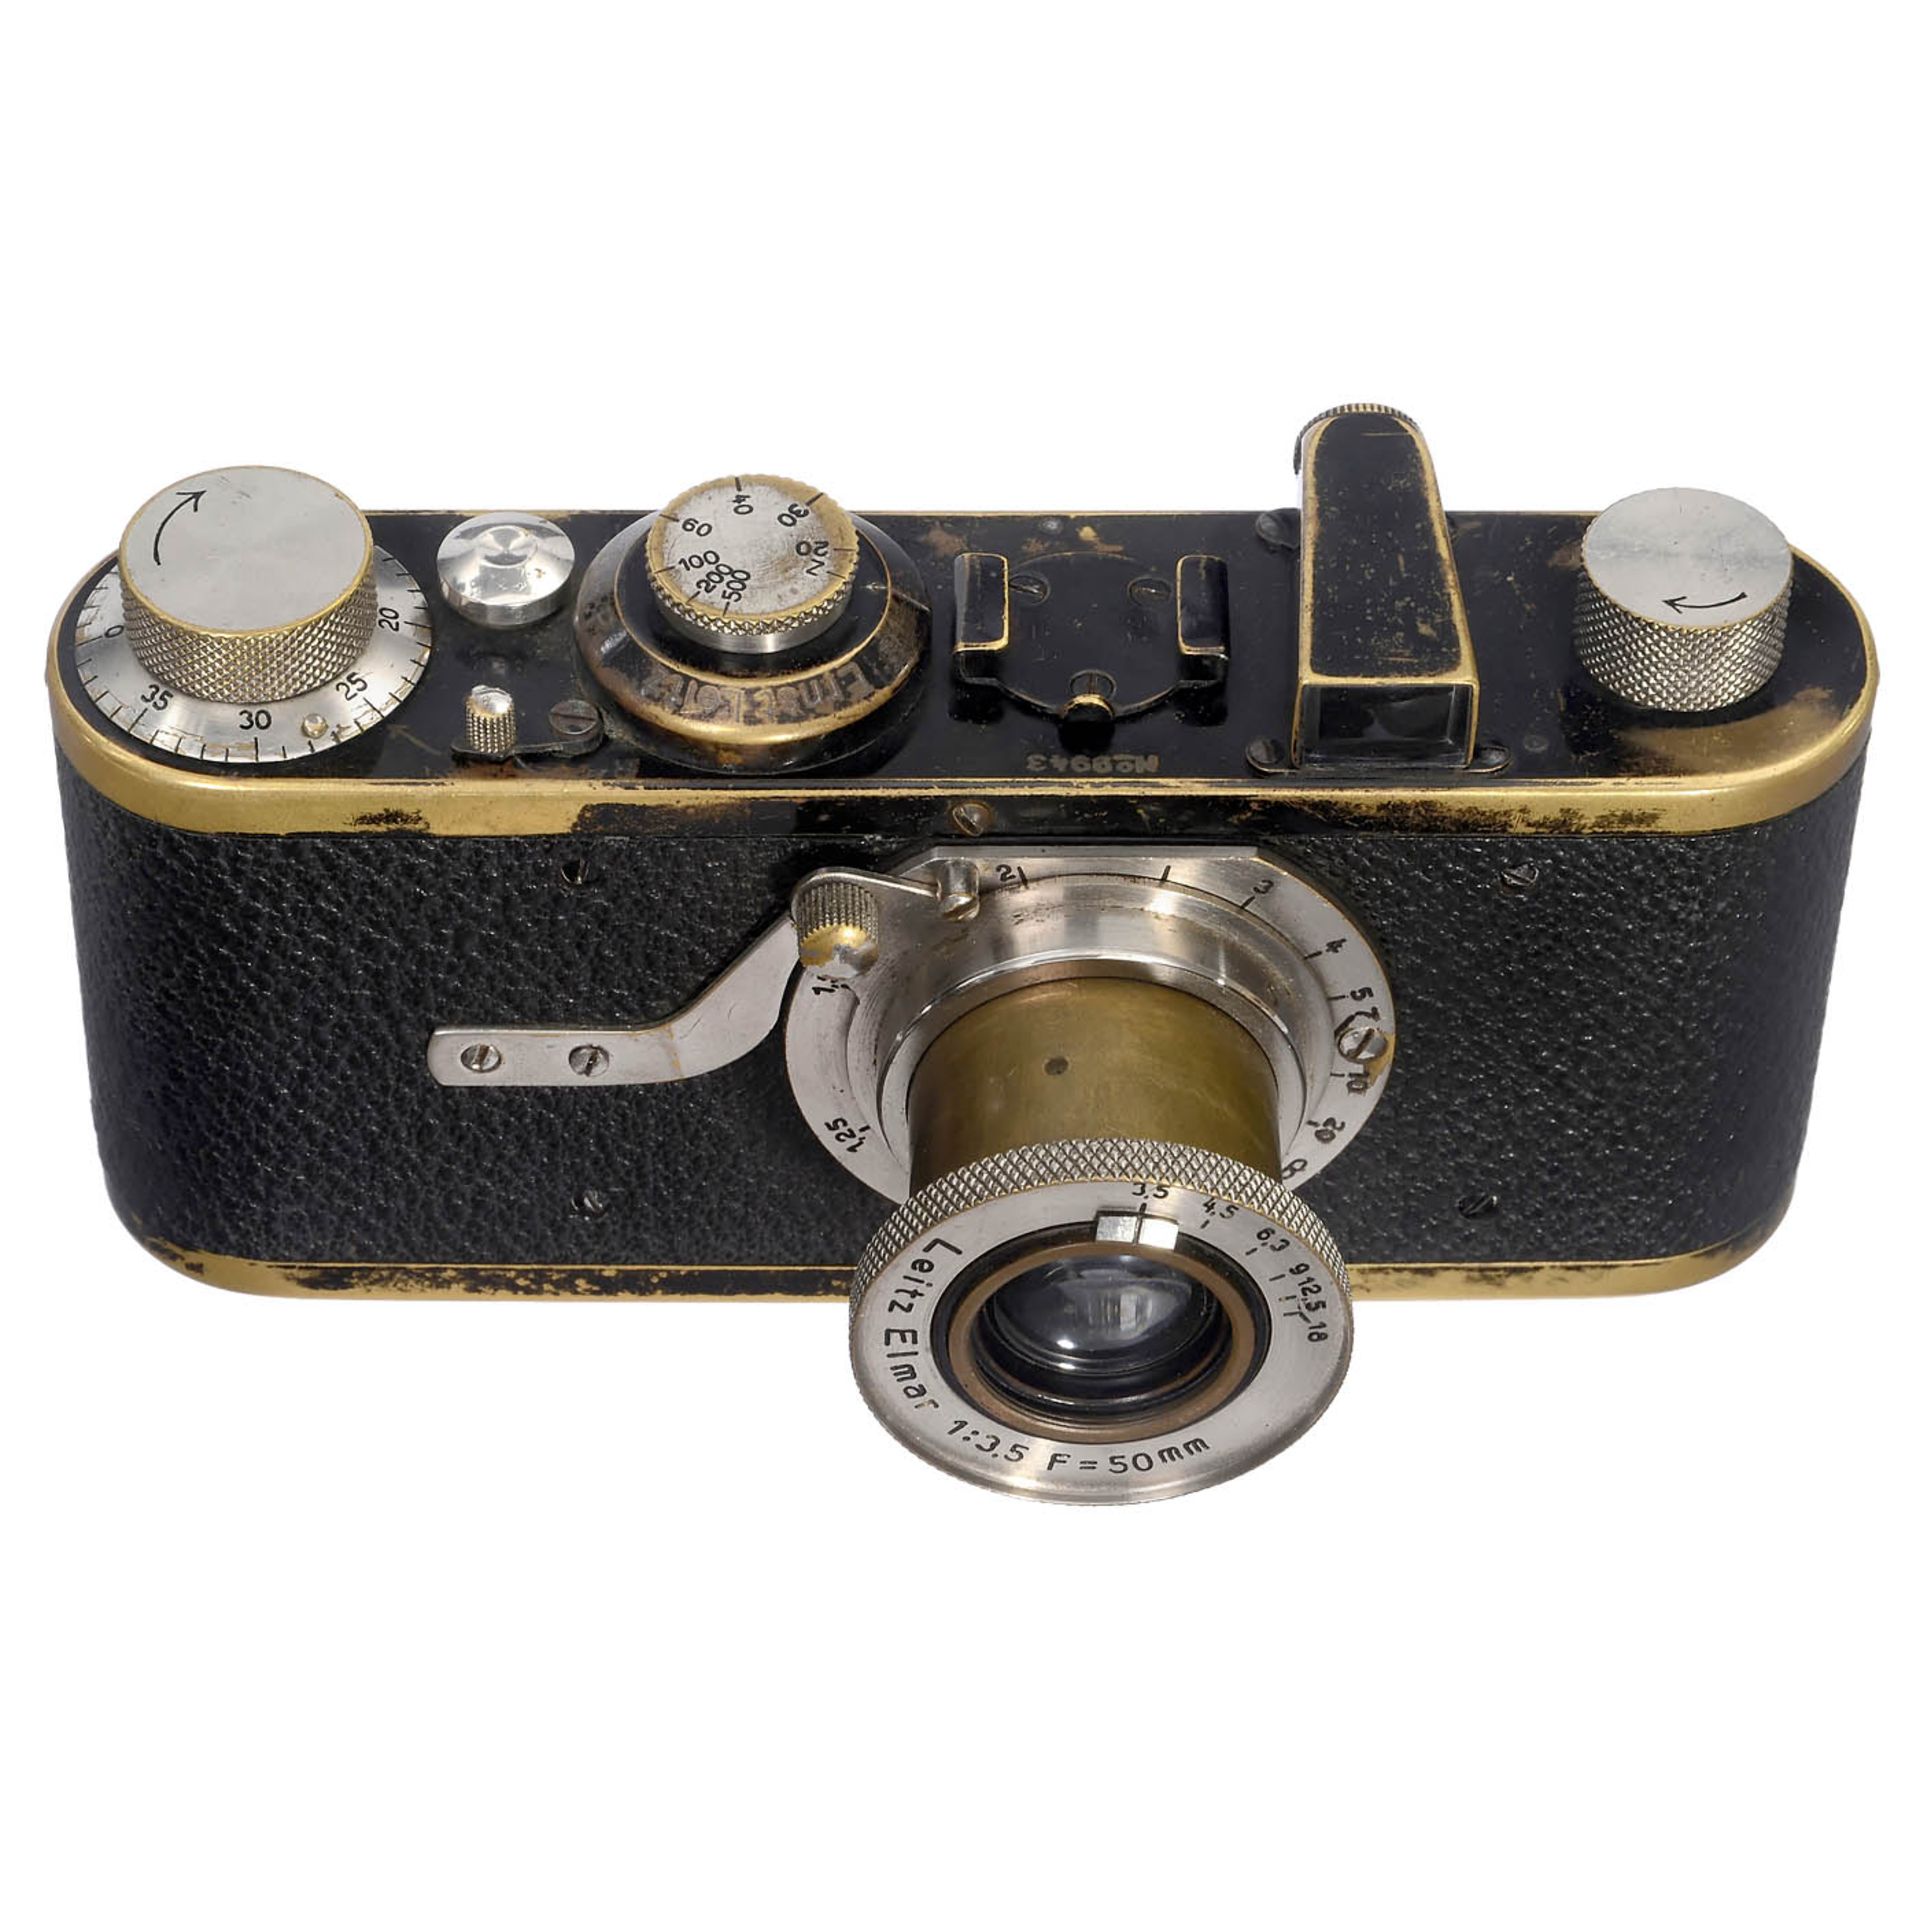 Leica I (Modell A), um 1928 Leitz, Wetzlar. Nr. 9943, mit Elmar 3,5/50 mm. Pilzförmiger Auslöser mit